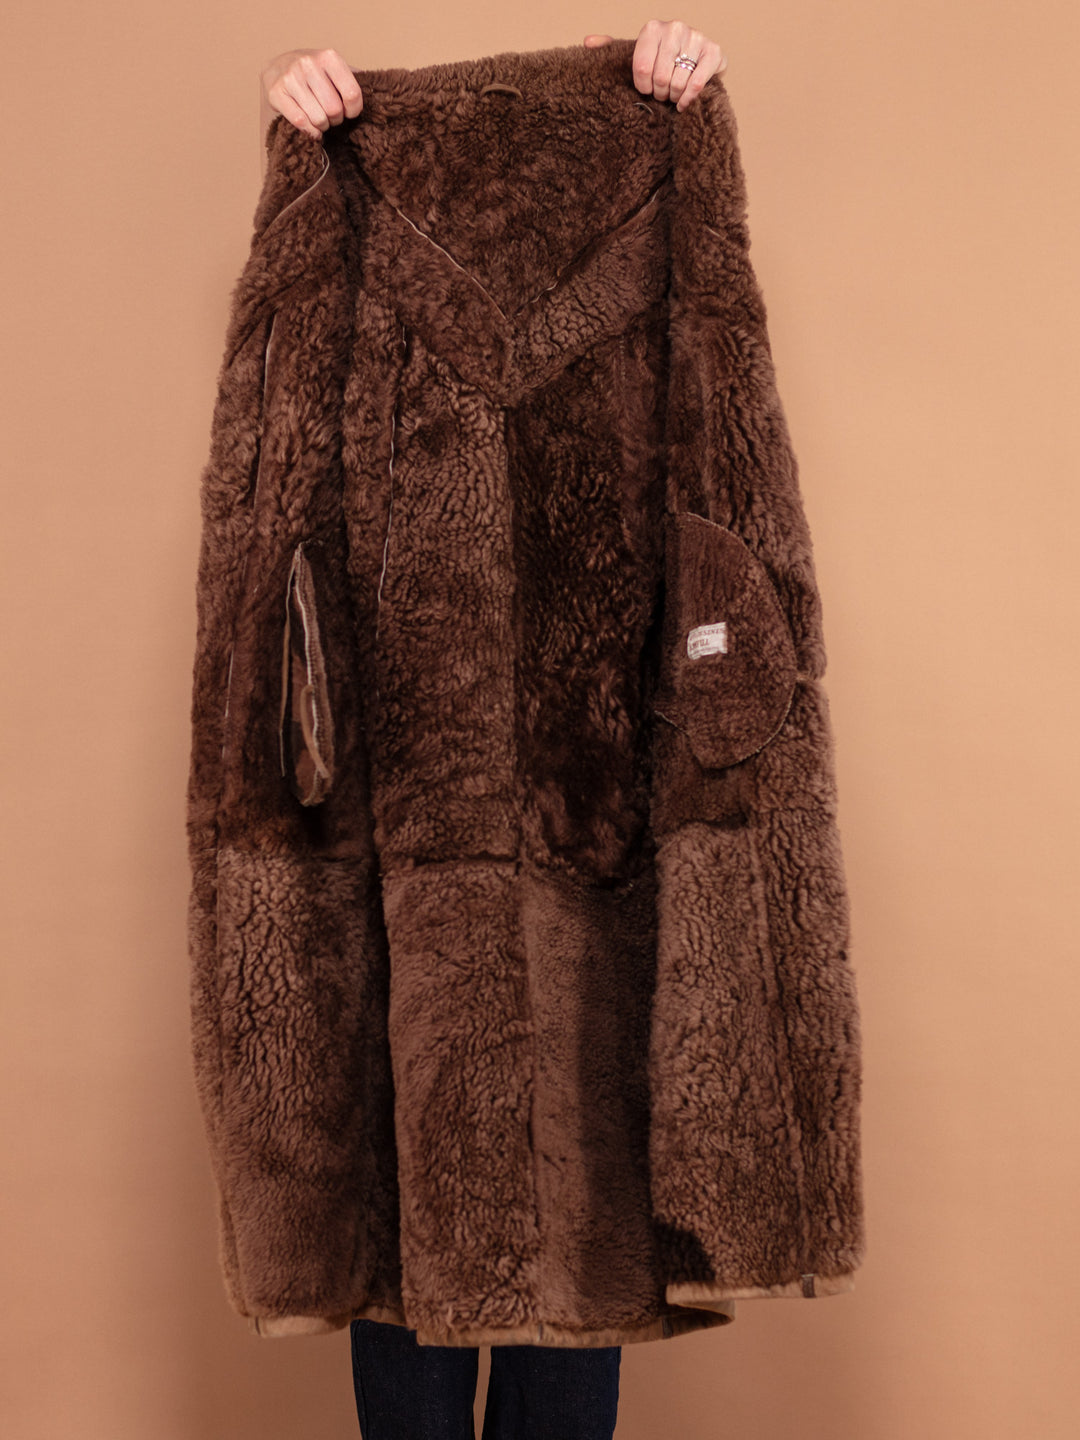 Sheepskin Long Coat, Size L Shearling Coat, Massive Sheepskin Overcoat, Oversized Sheepskin Coat, Penny Lane, Retro Leather Suede Coat